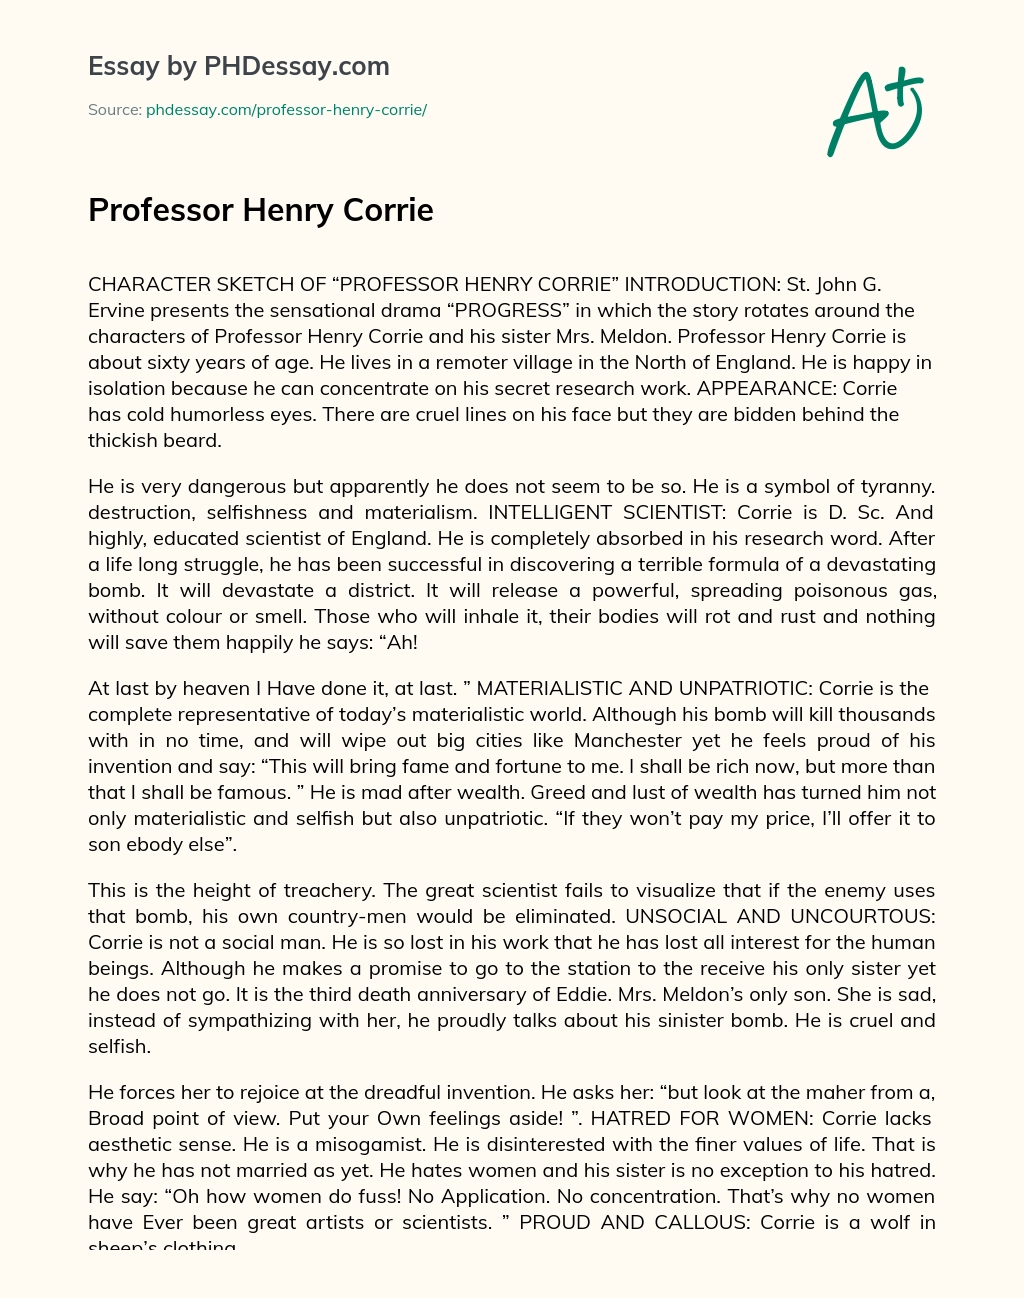 Professor Henry Corrie essay